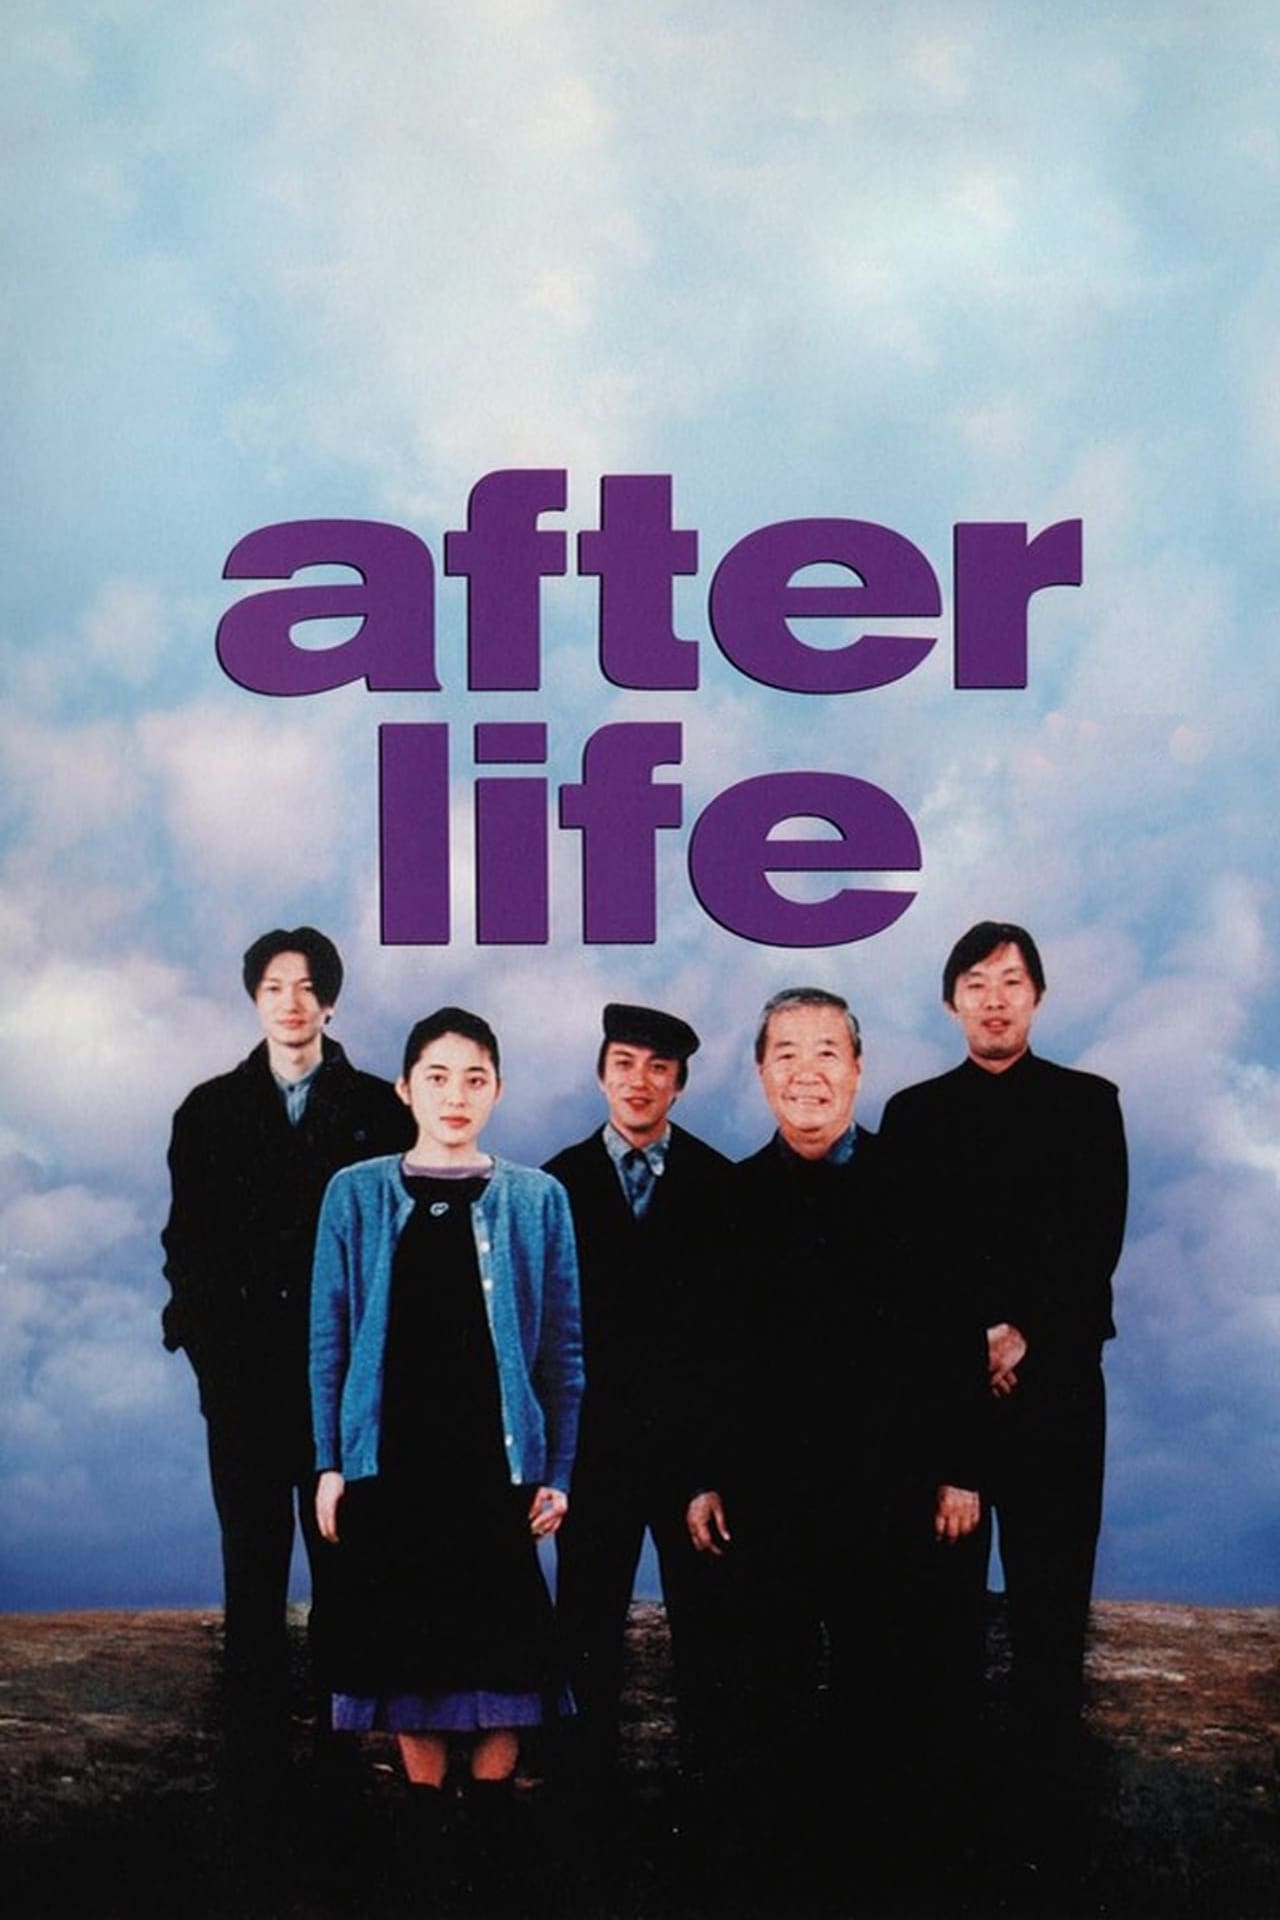 Plakát pro film “After Life”